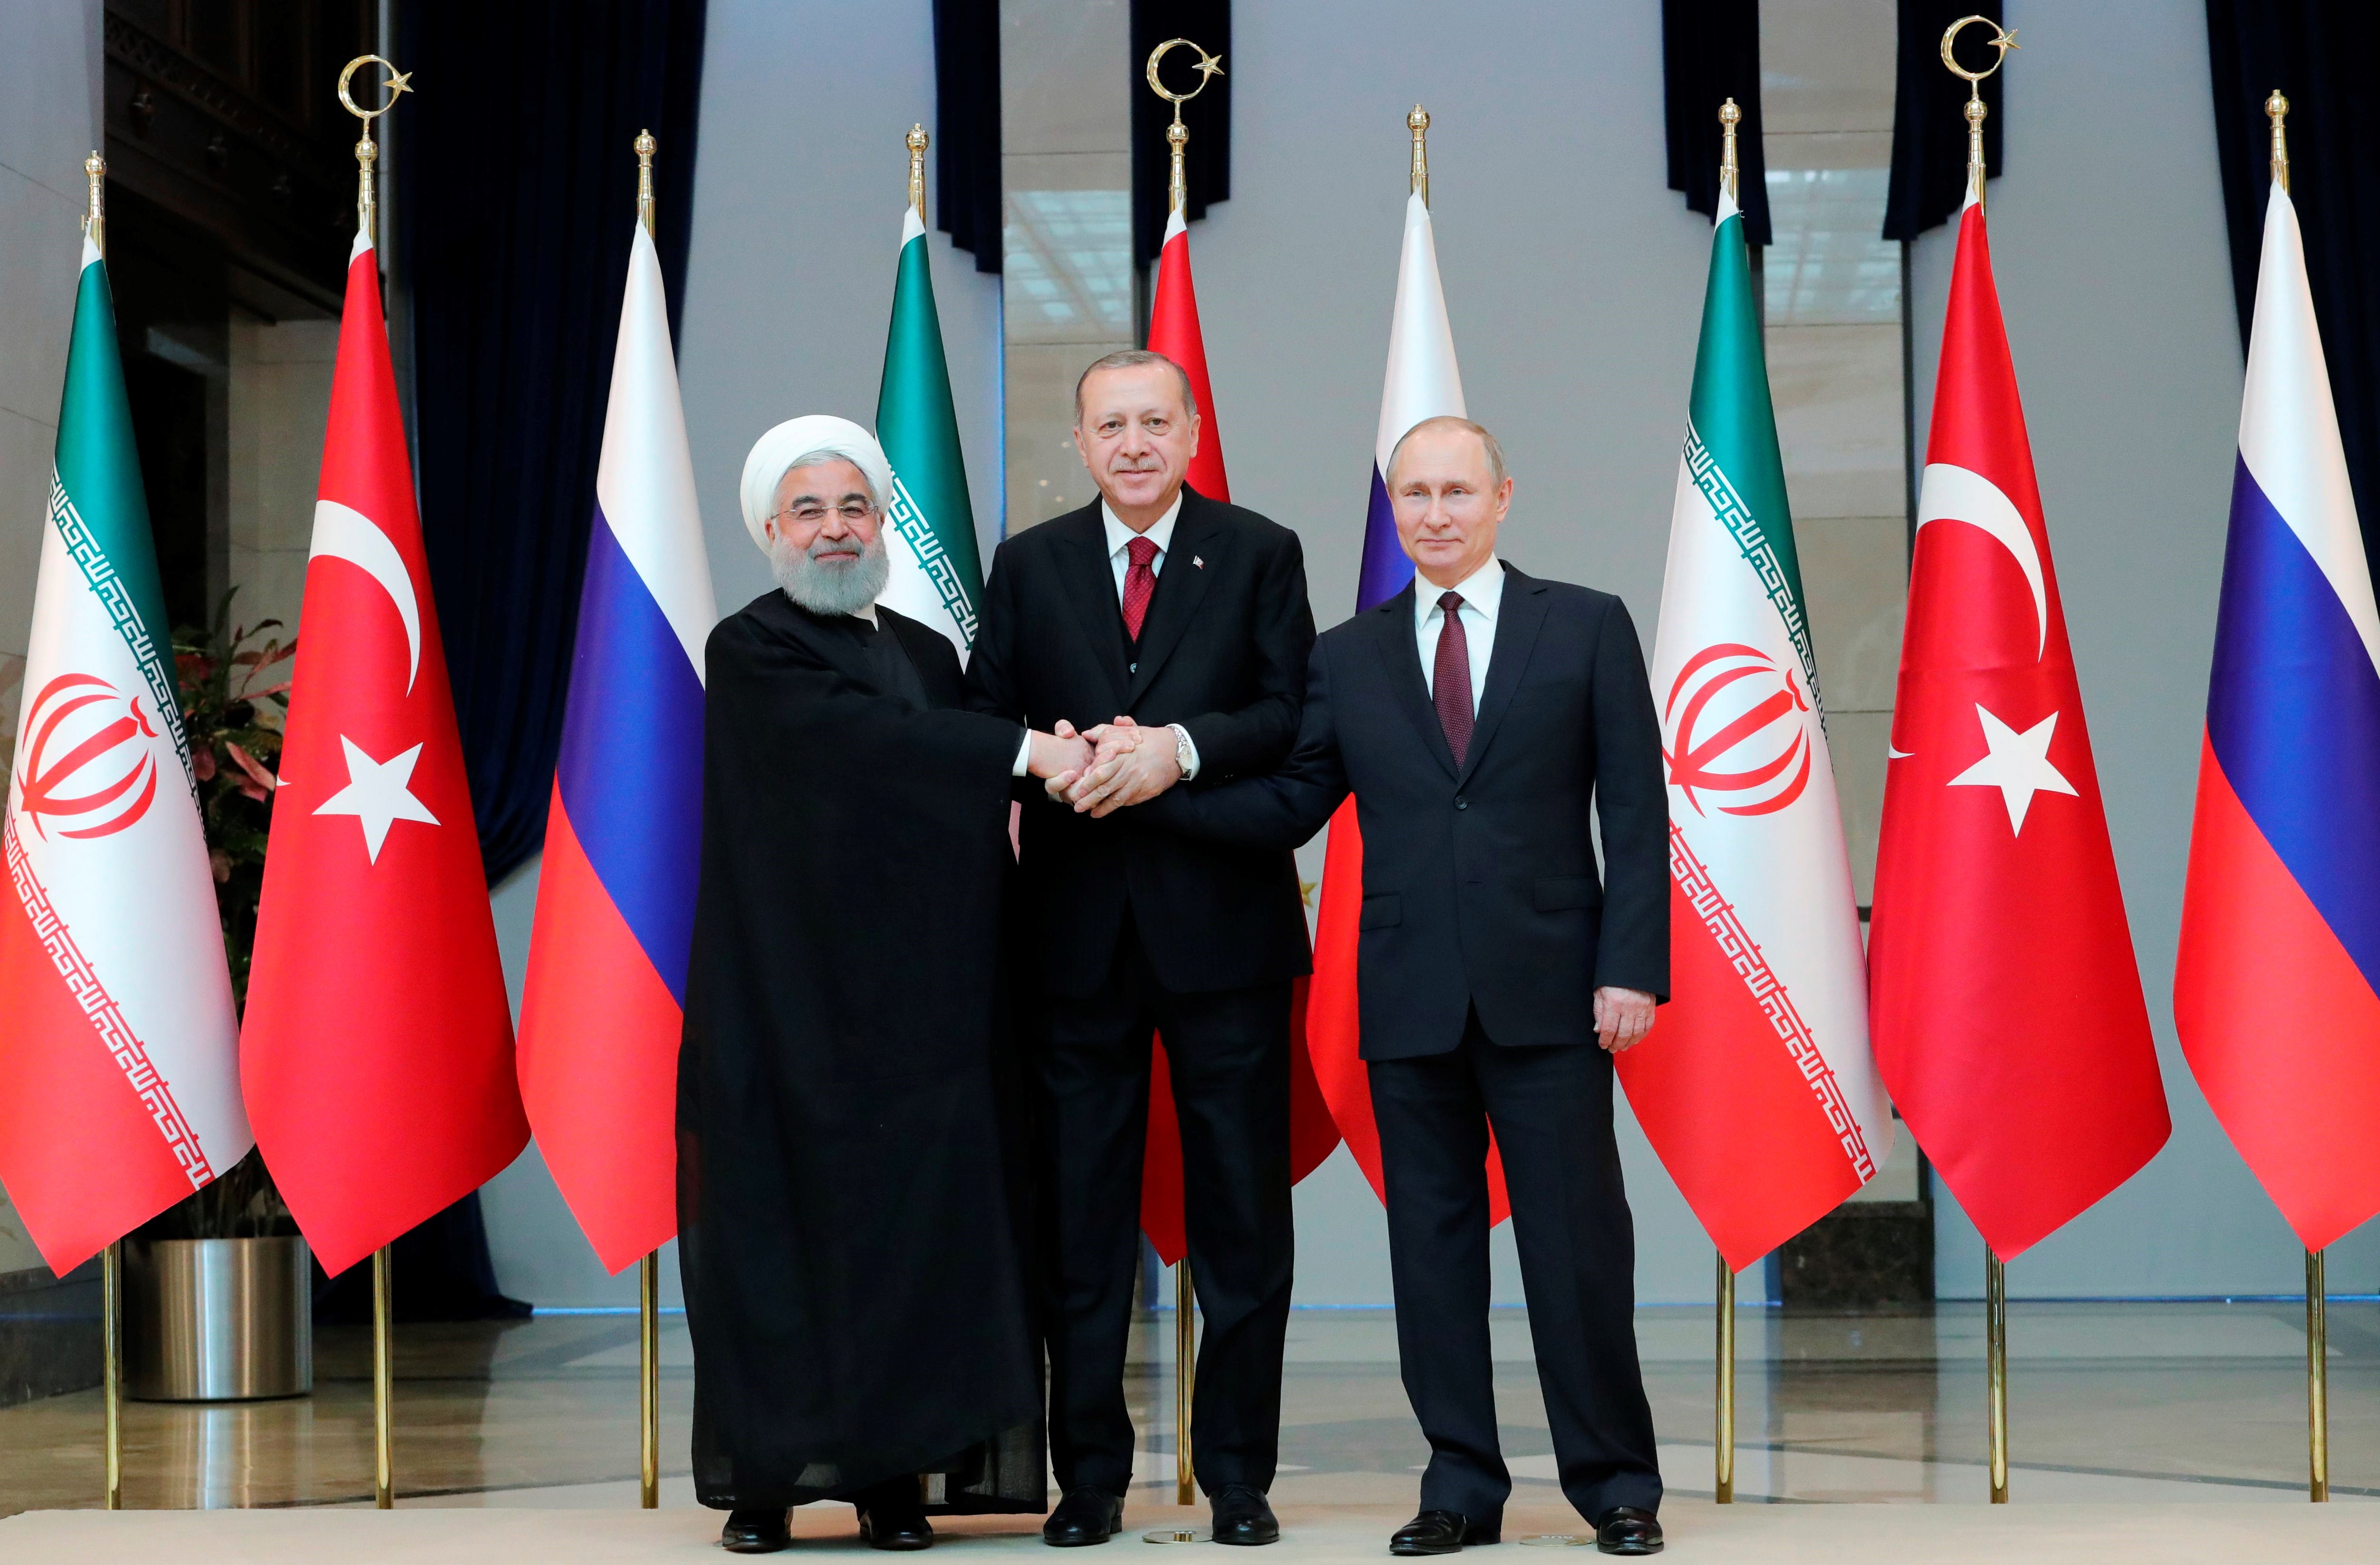 Turkish President Recep Tayyip Erdogan (C), Russian President Vladimir Putin (R) and Iranian President Hassan Rouhani (L) join hands as they pose for a family photo during their meeting at the Presidential Palace in Ankara, Turkey, Apr. 4,l 2018. EPA-EFE/MIKHAIL KLIMENTYEV/SPUTNIK/KREMLIN / POOL
